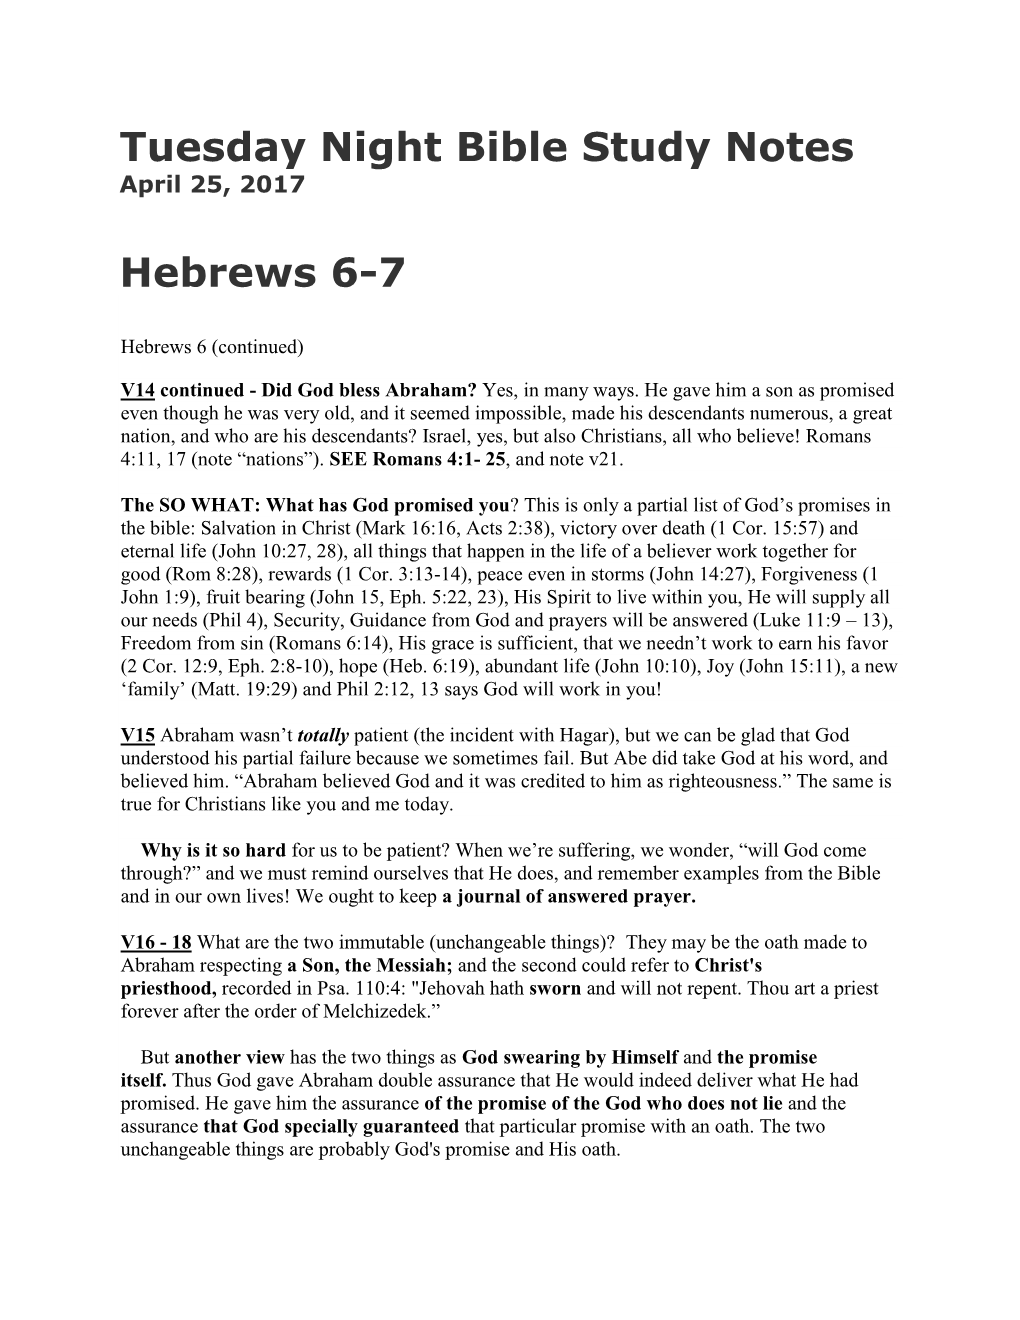 Tuesday Night Bible Study Notes Hebrews